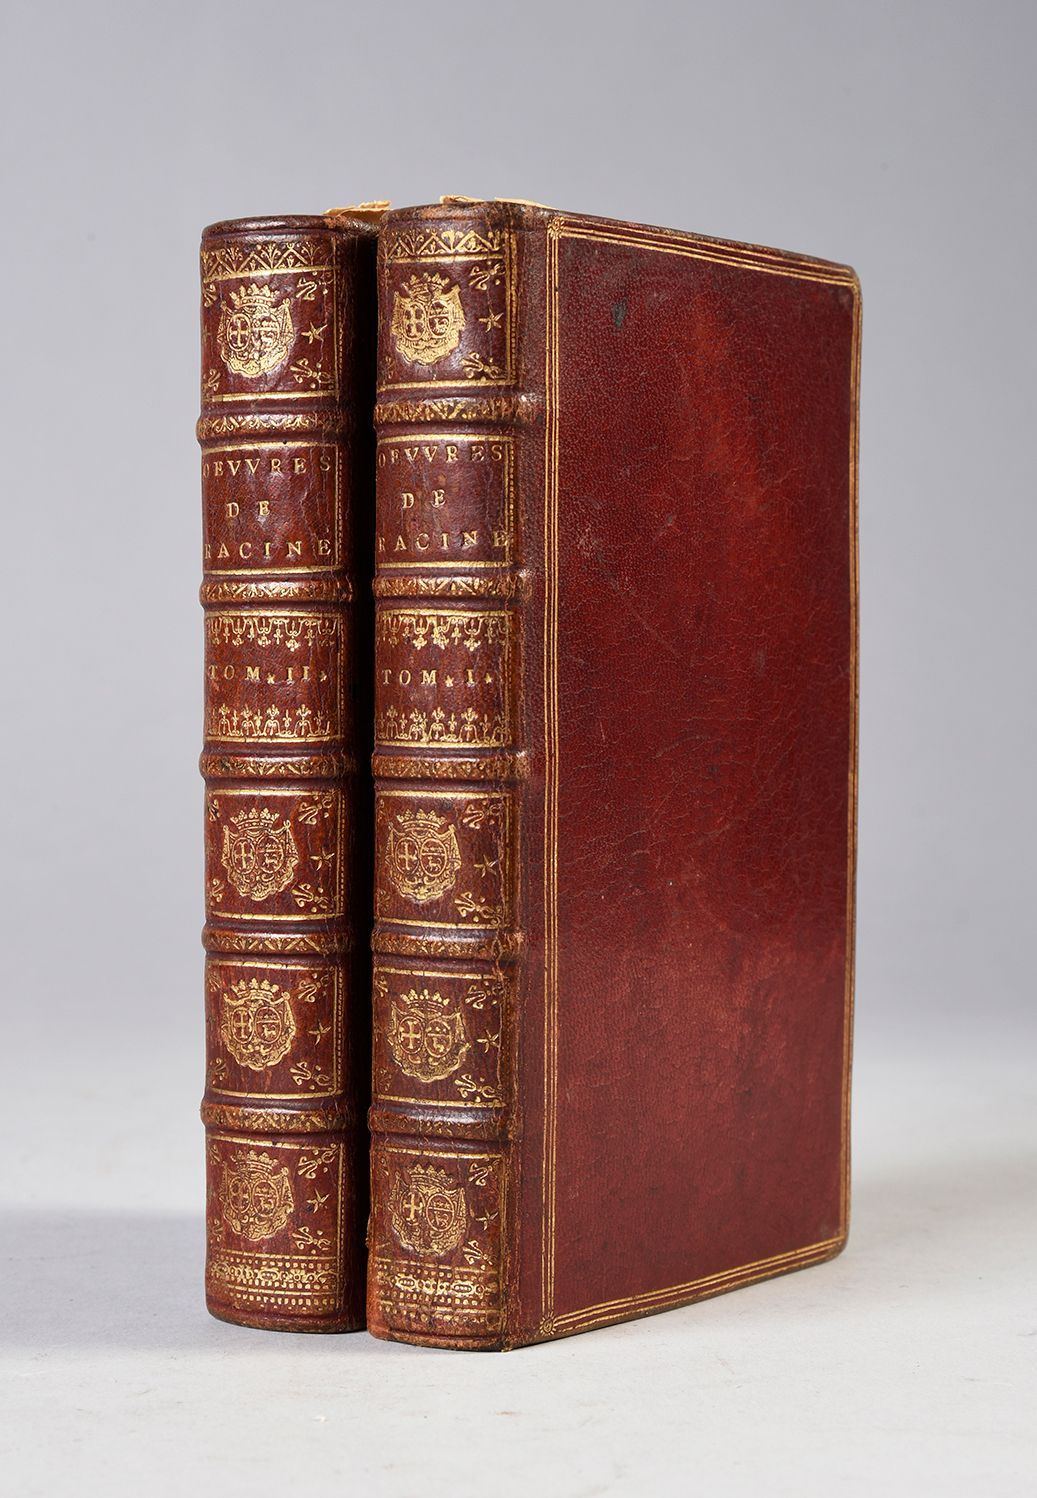 RACINE, Jean Œuvres [...]
P., Denys Thierry 1702.
2 Bände in-12, rotes Ganzmaroq&hellip;